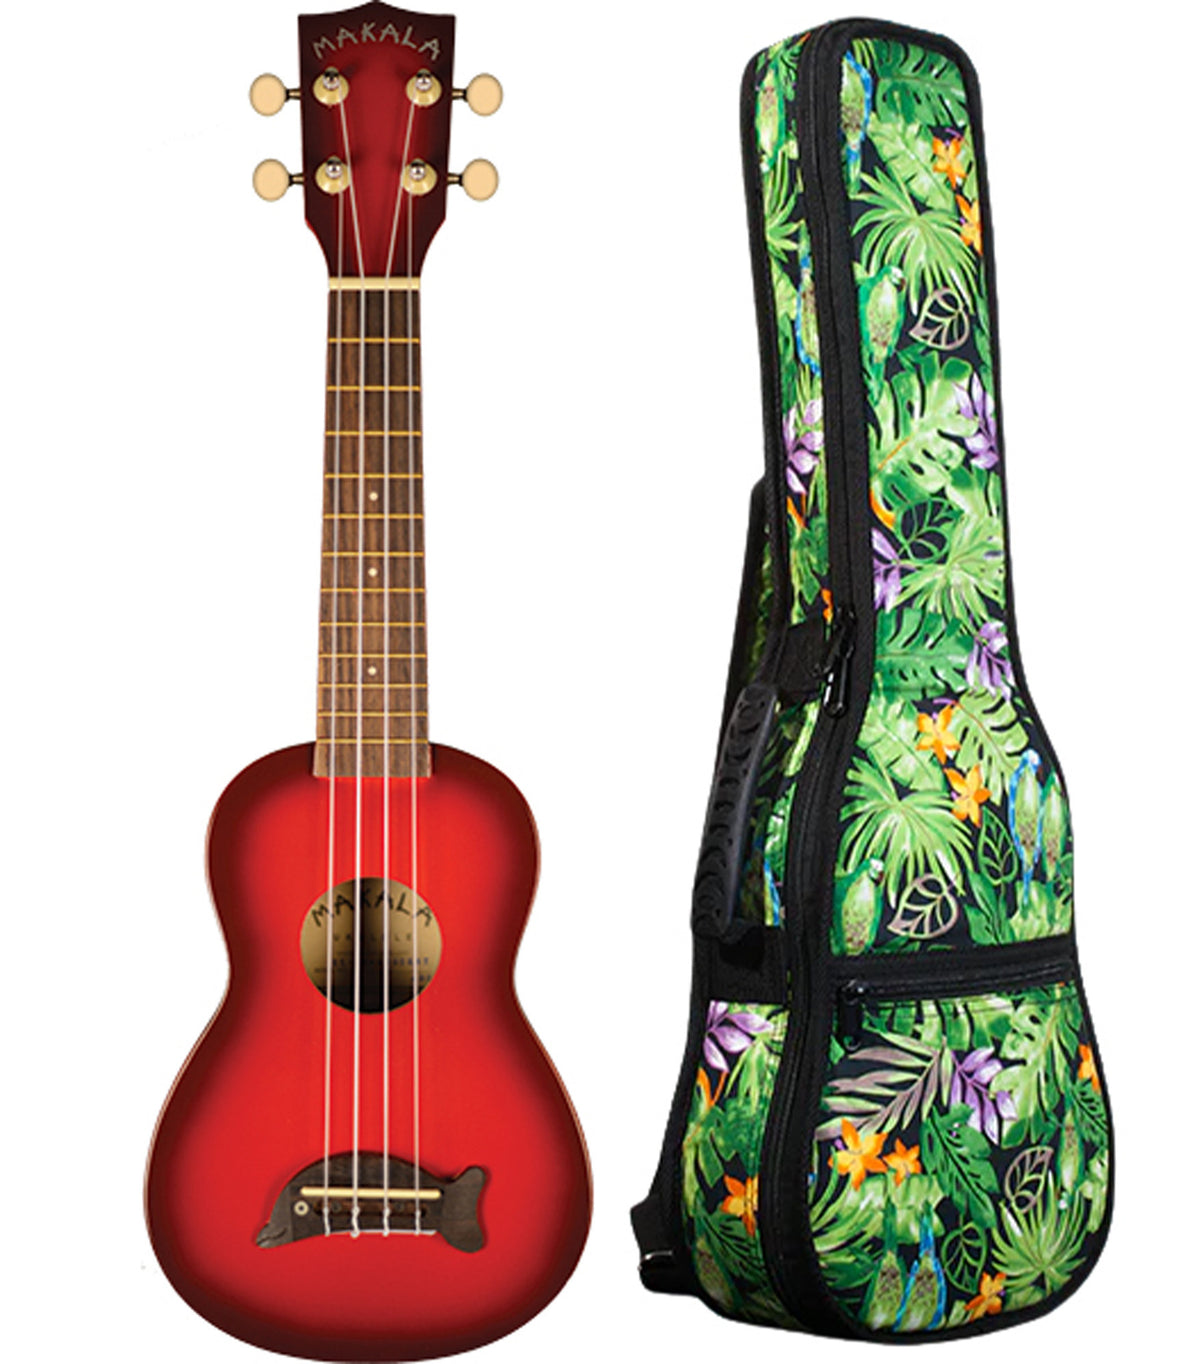 MK-SD/RDBRST Red Burst Soprano Dolphin Ukulele Includes Gigbag Floral Print, Padded with Backpack Straps